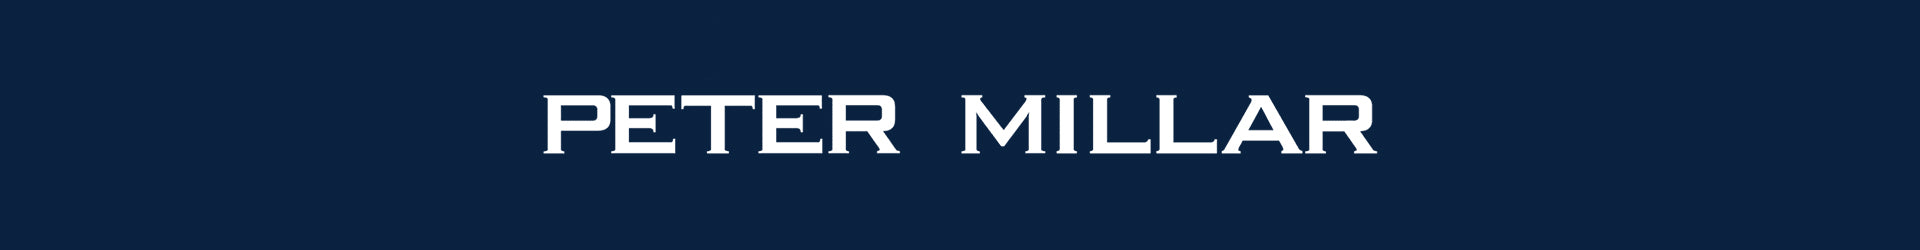 Peter Millar – The Boeing Store